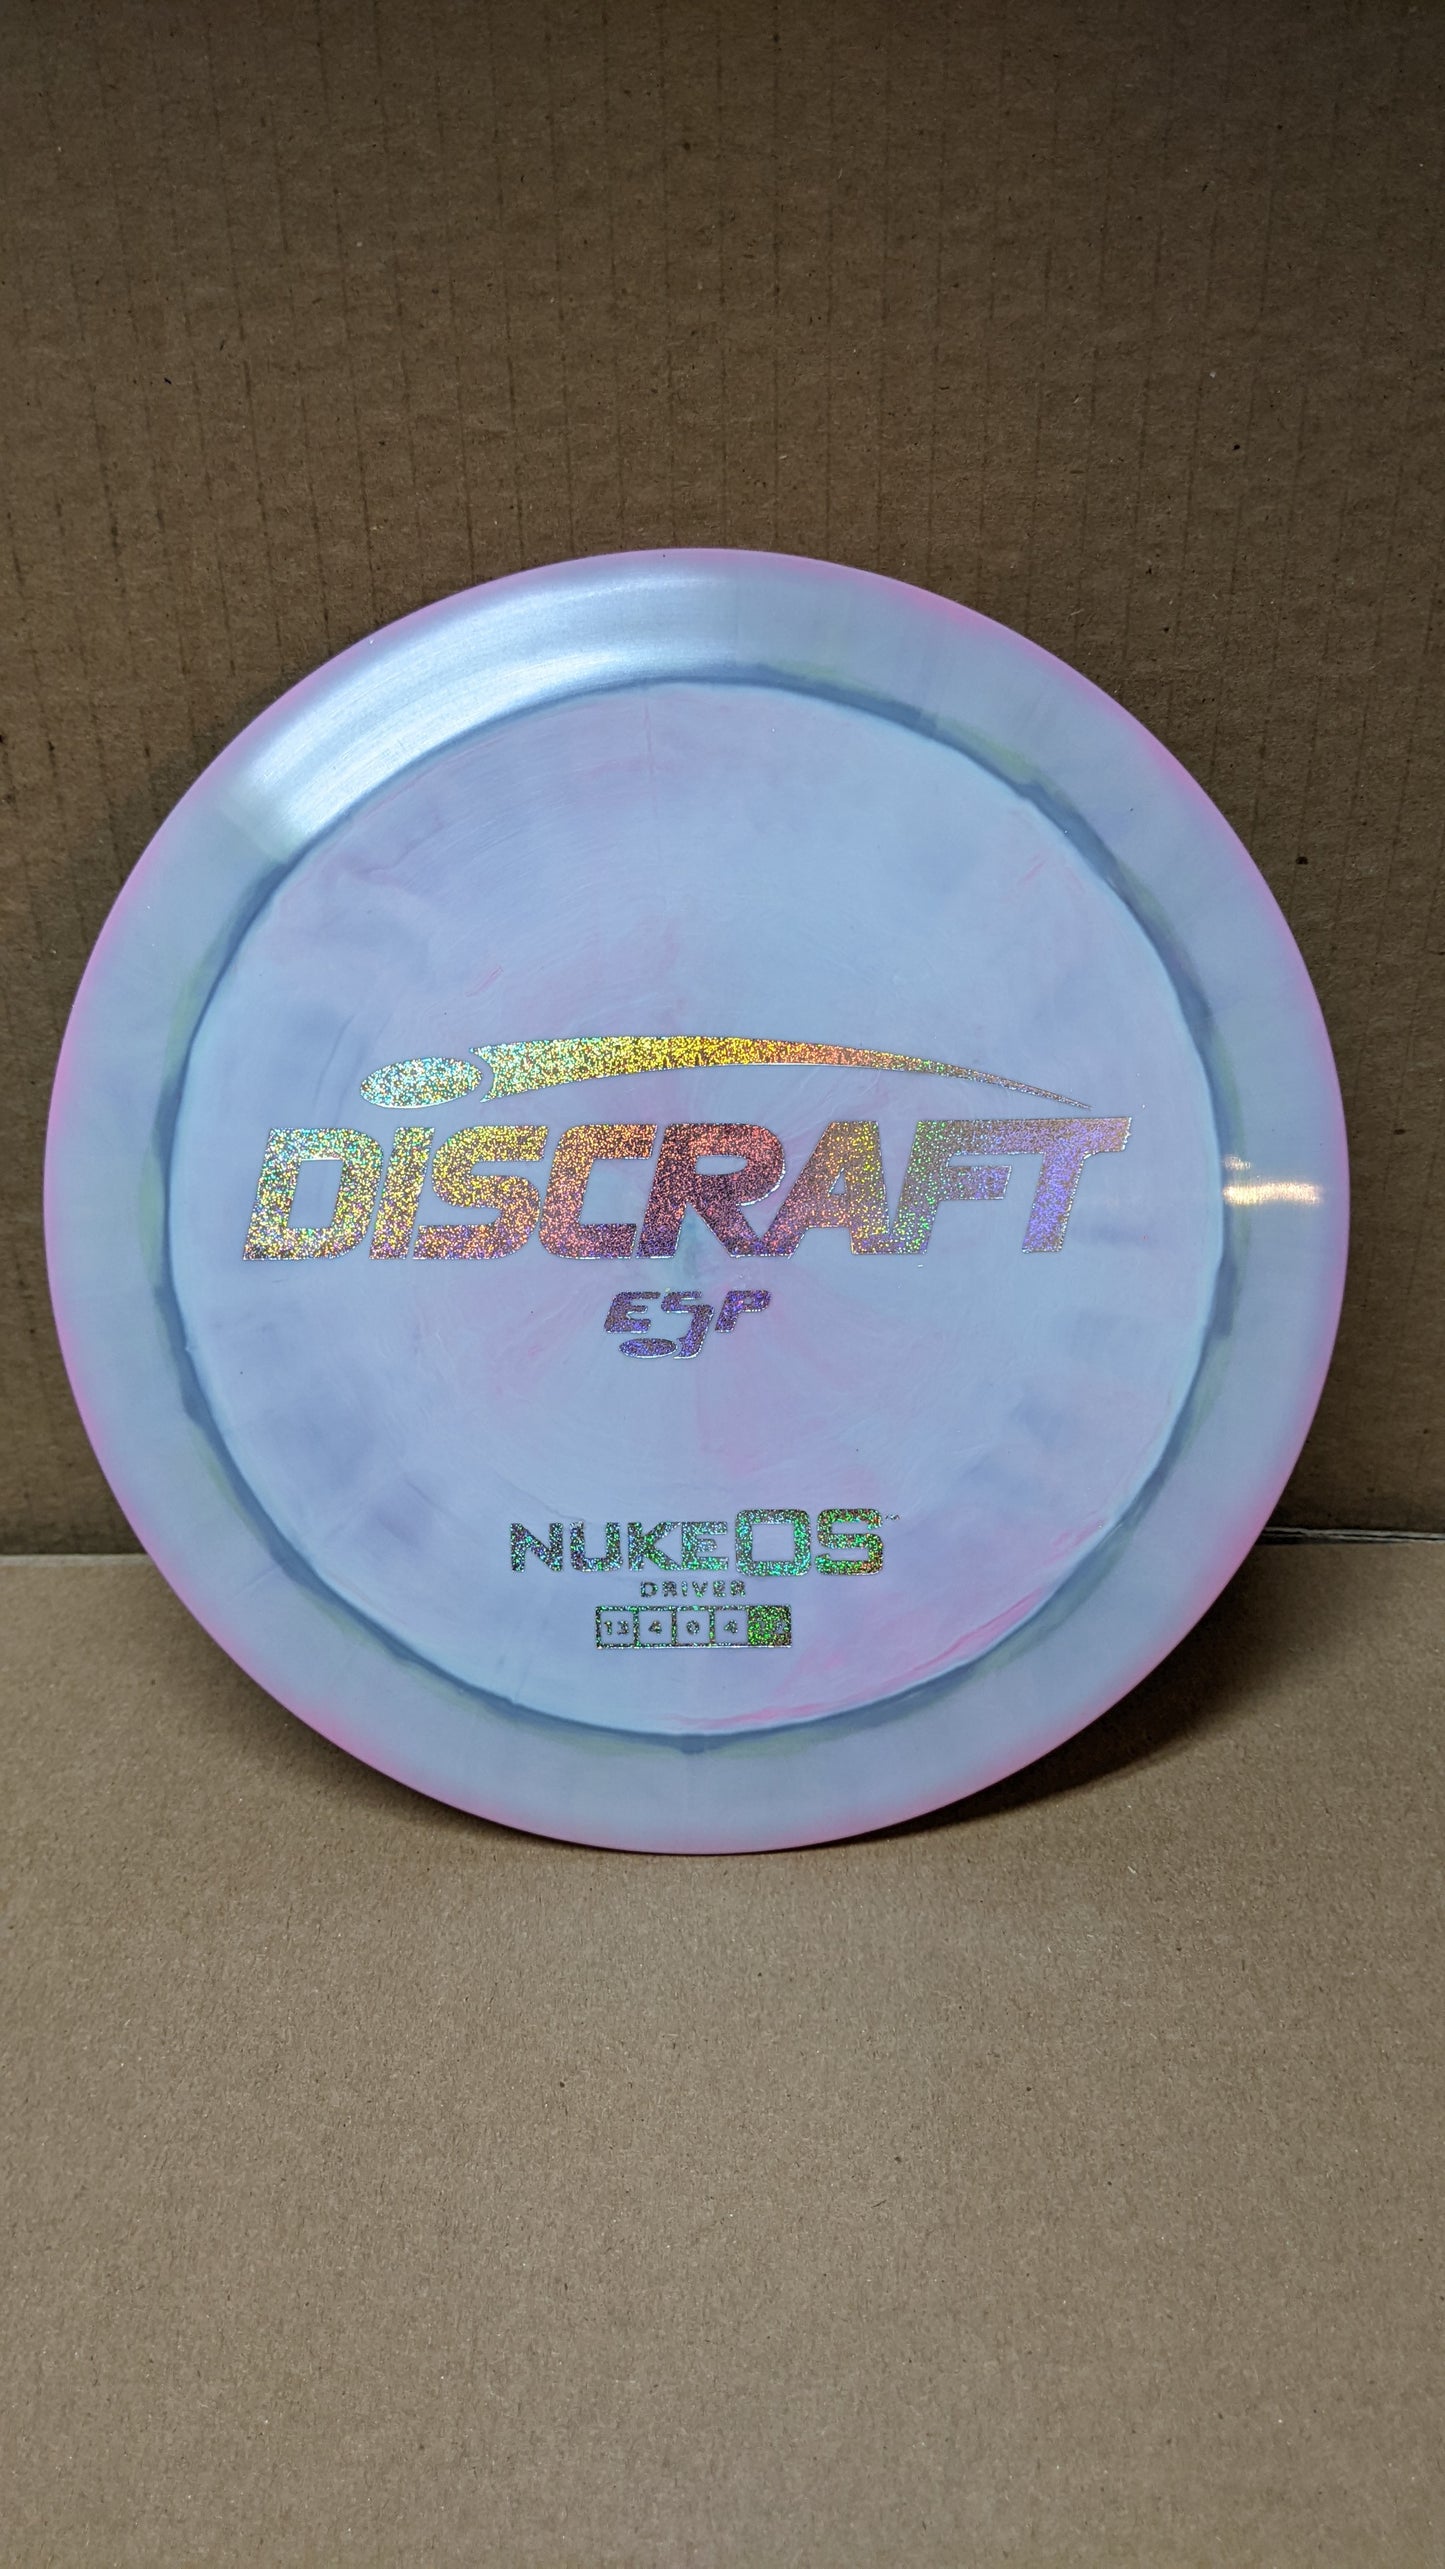 Discraft Nuke OS